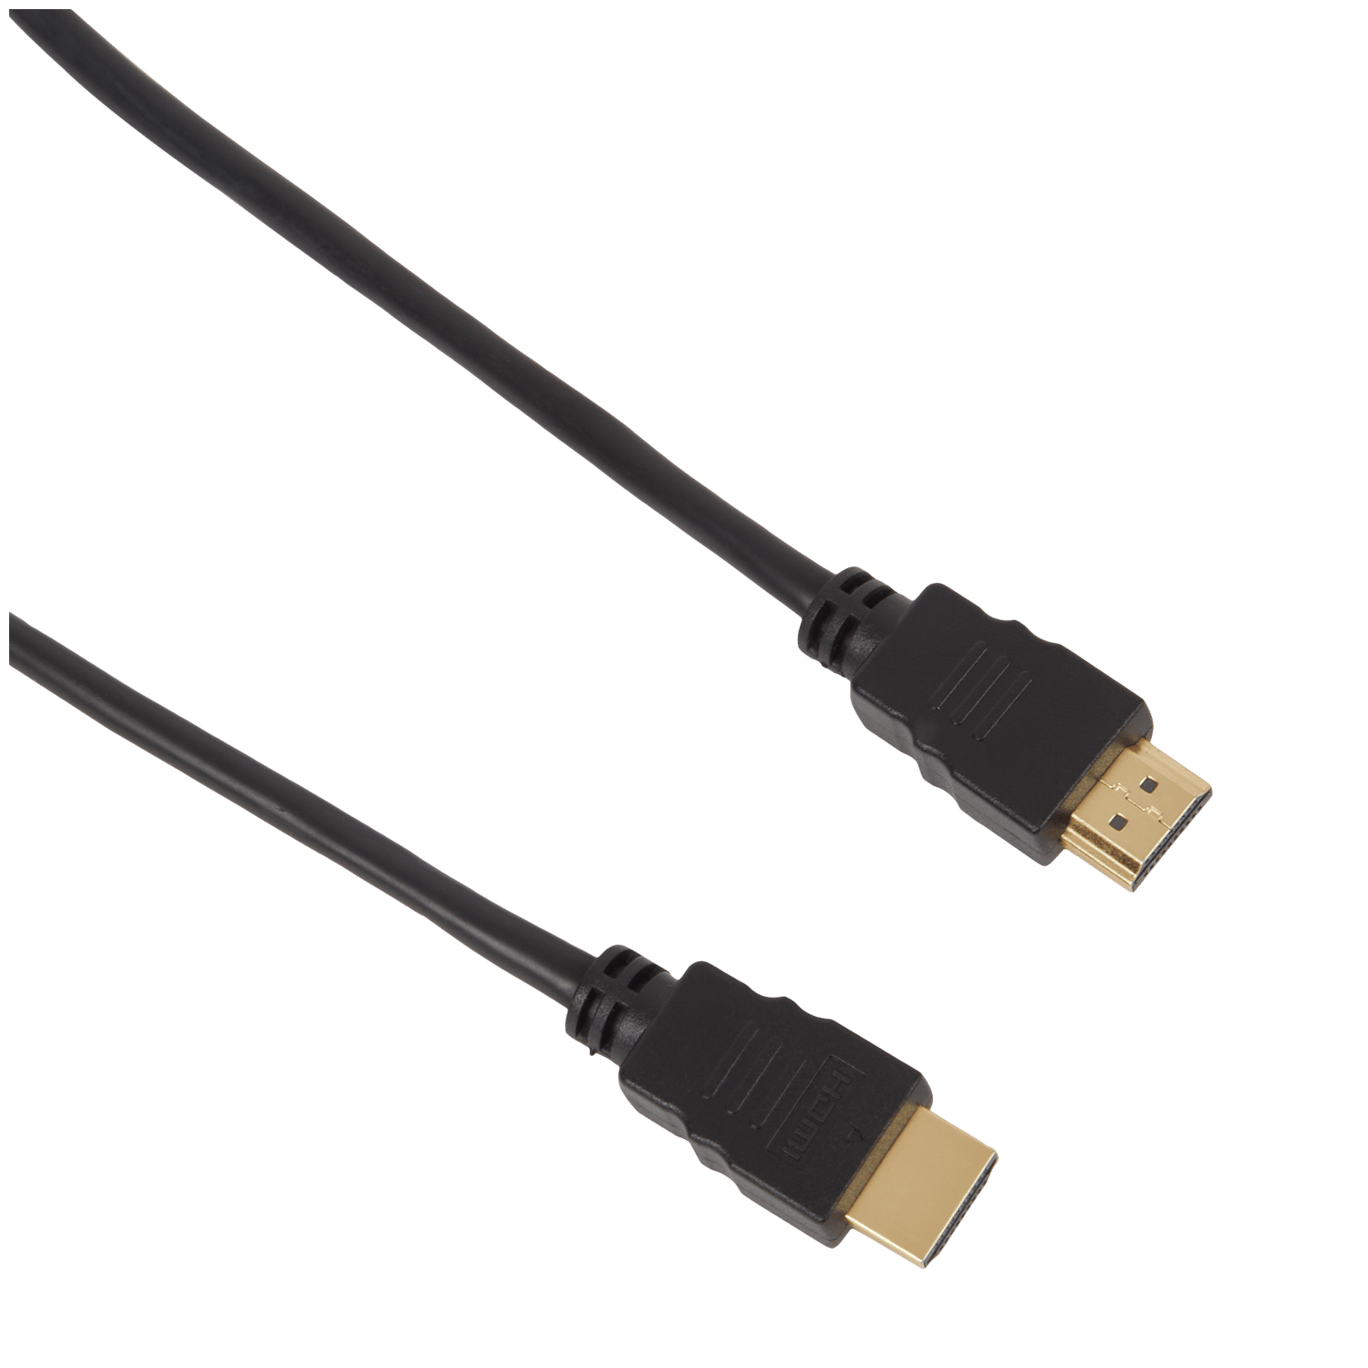 Renaissance Wet en regelgeving Uitdaging CableMax HDMI-kabel | Action.com